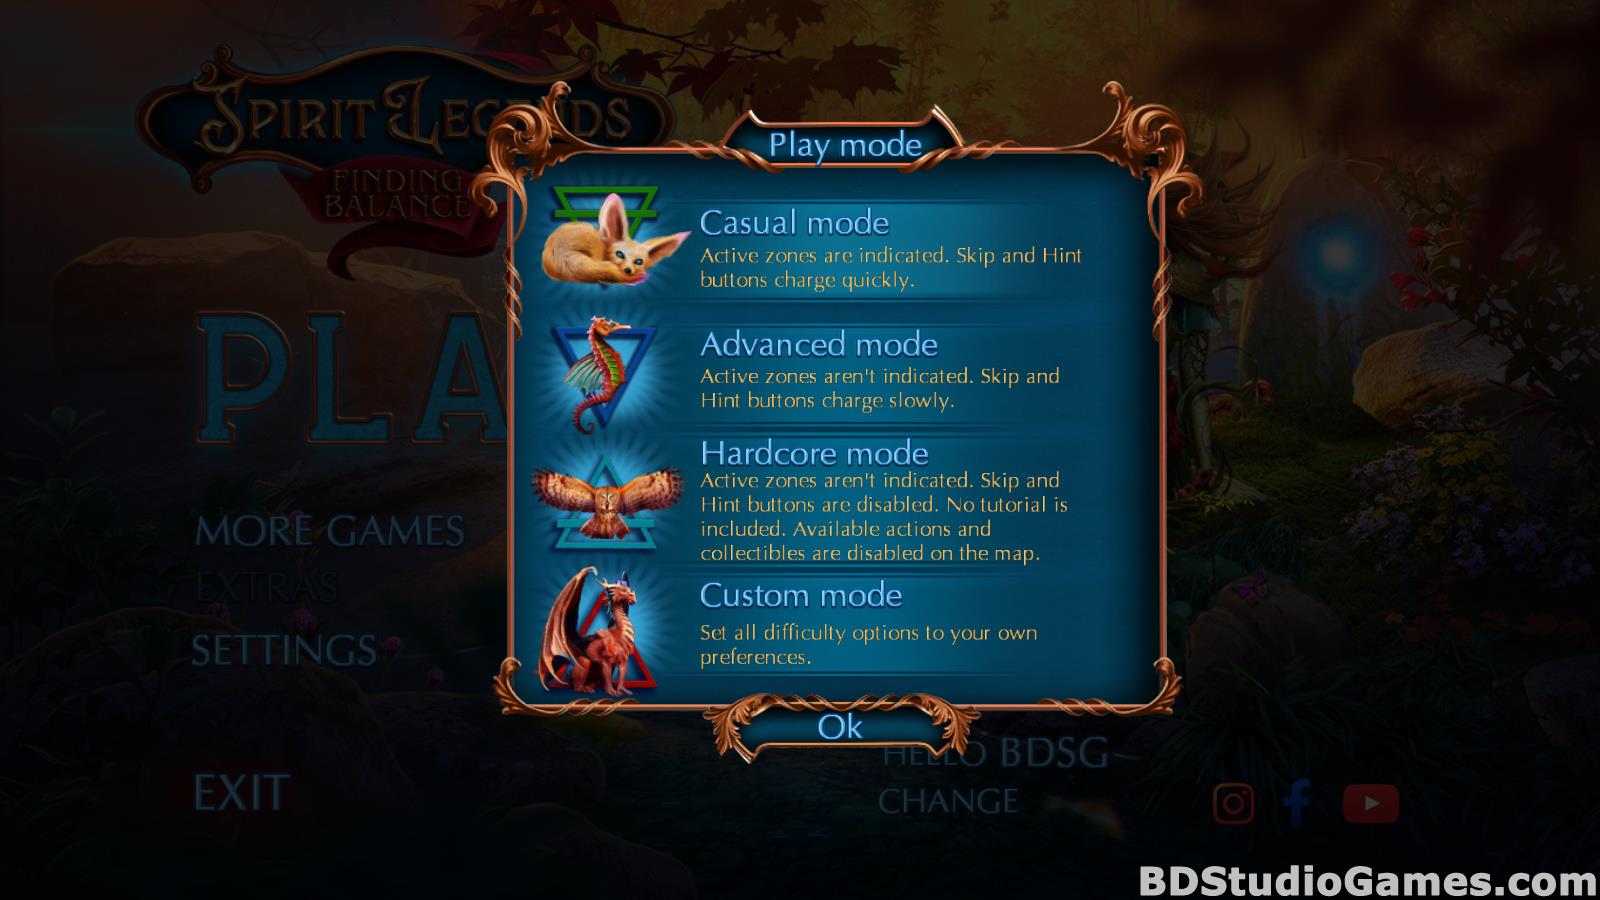 Spirit Legends: Finding Balance Collector's Edition Free Download Screenshots 04